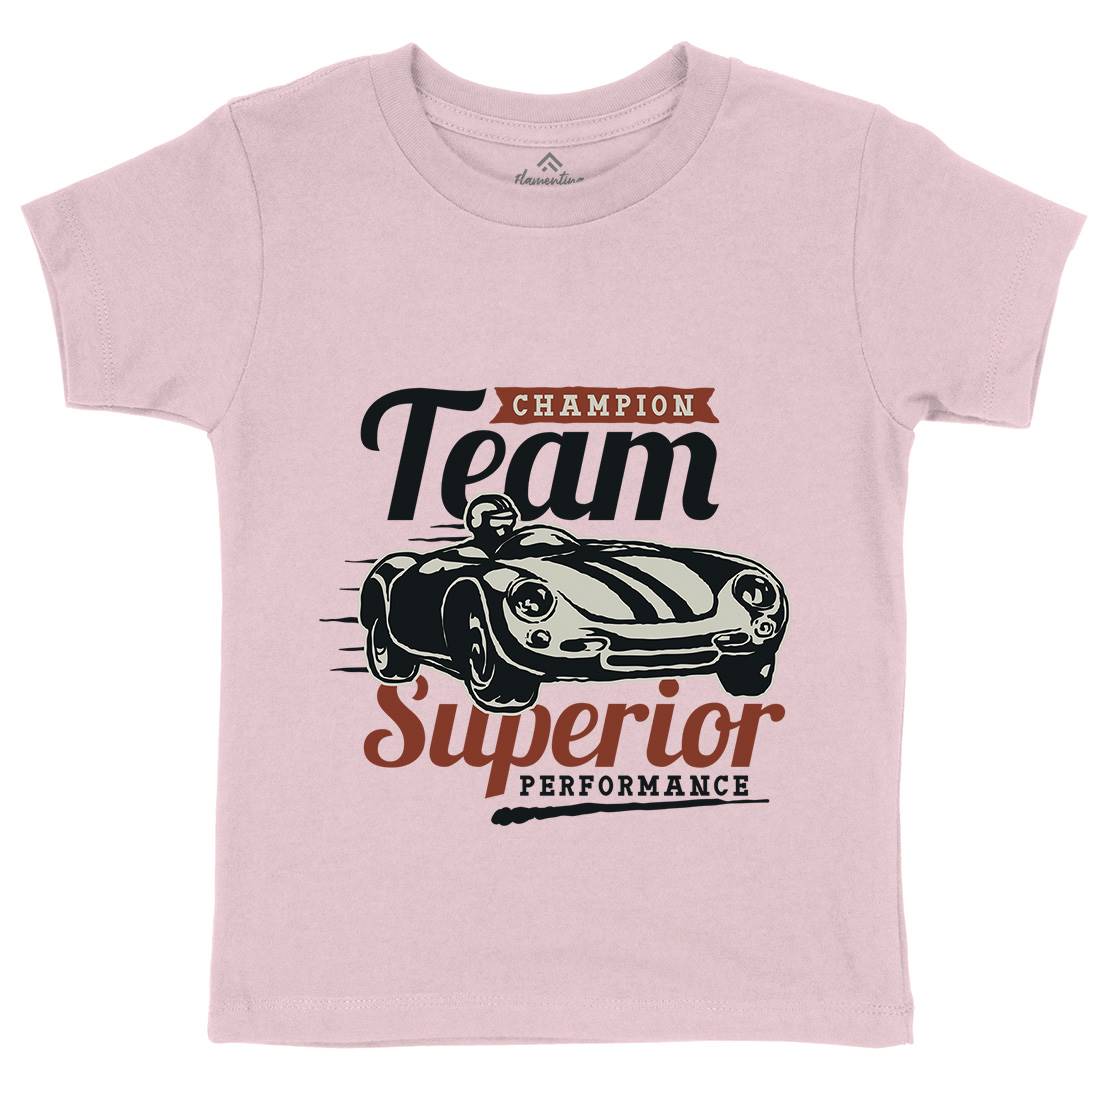 Vintage Racer Champion Kids Crew Neck T-Shirt Cars A492